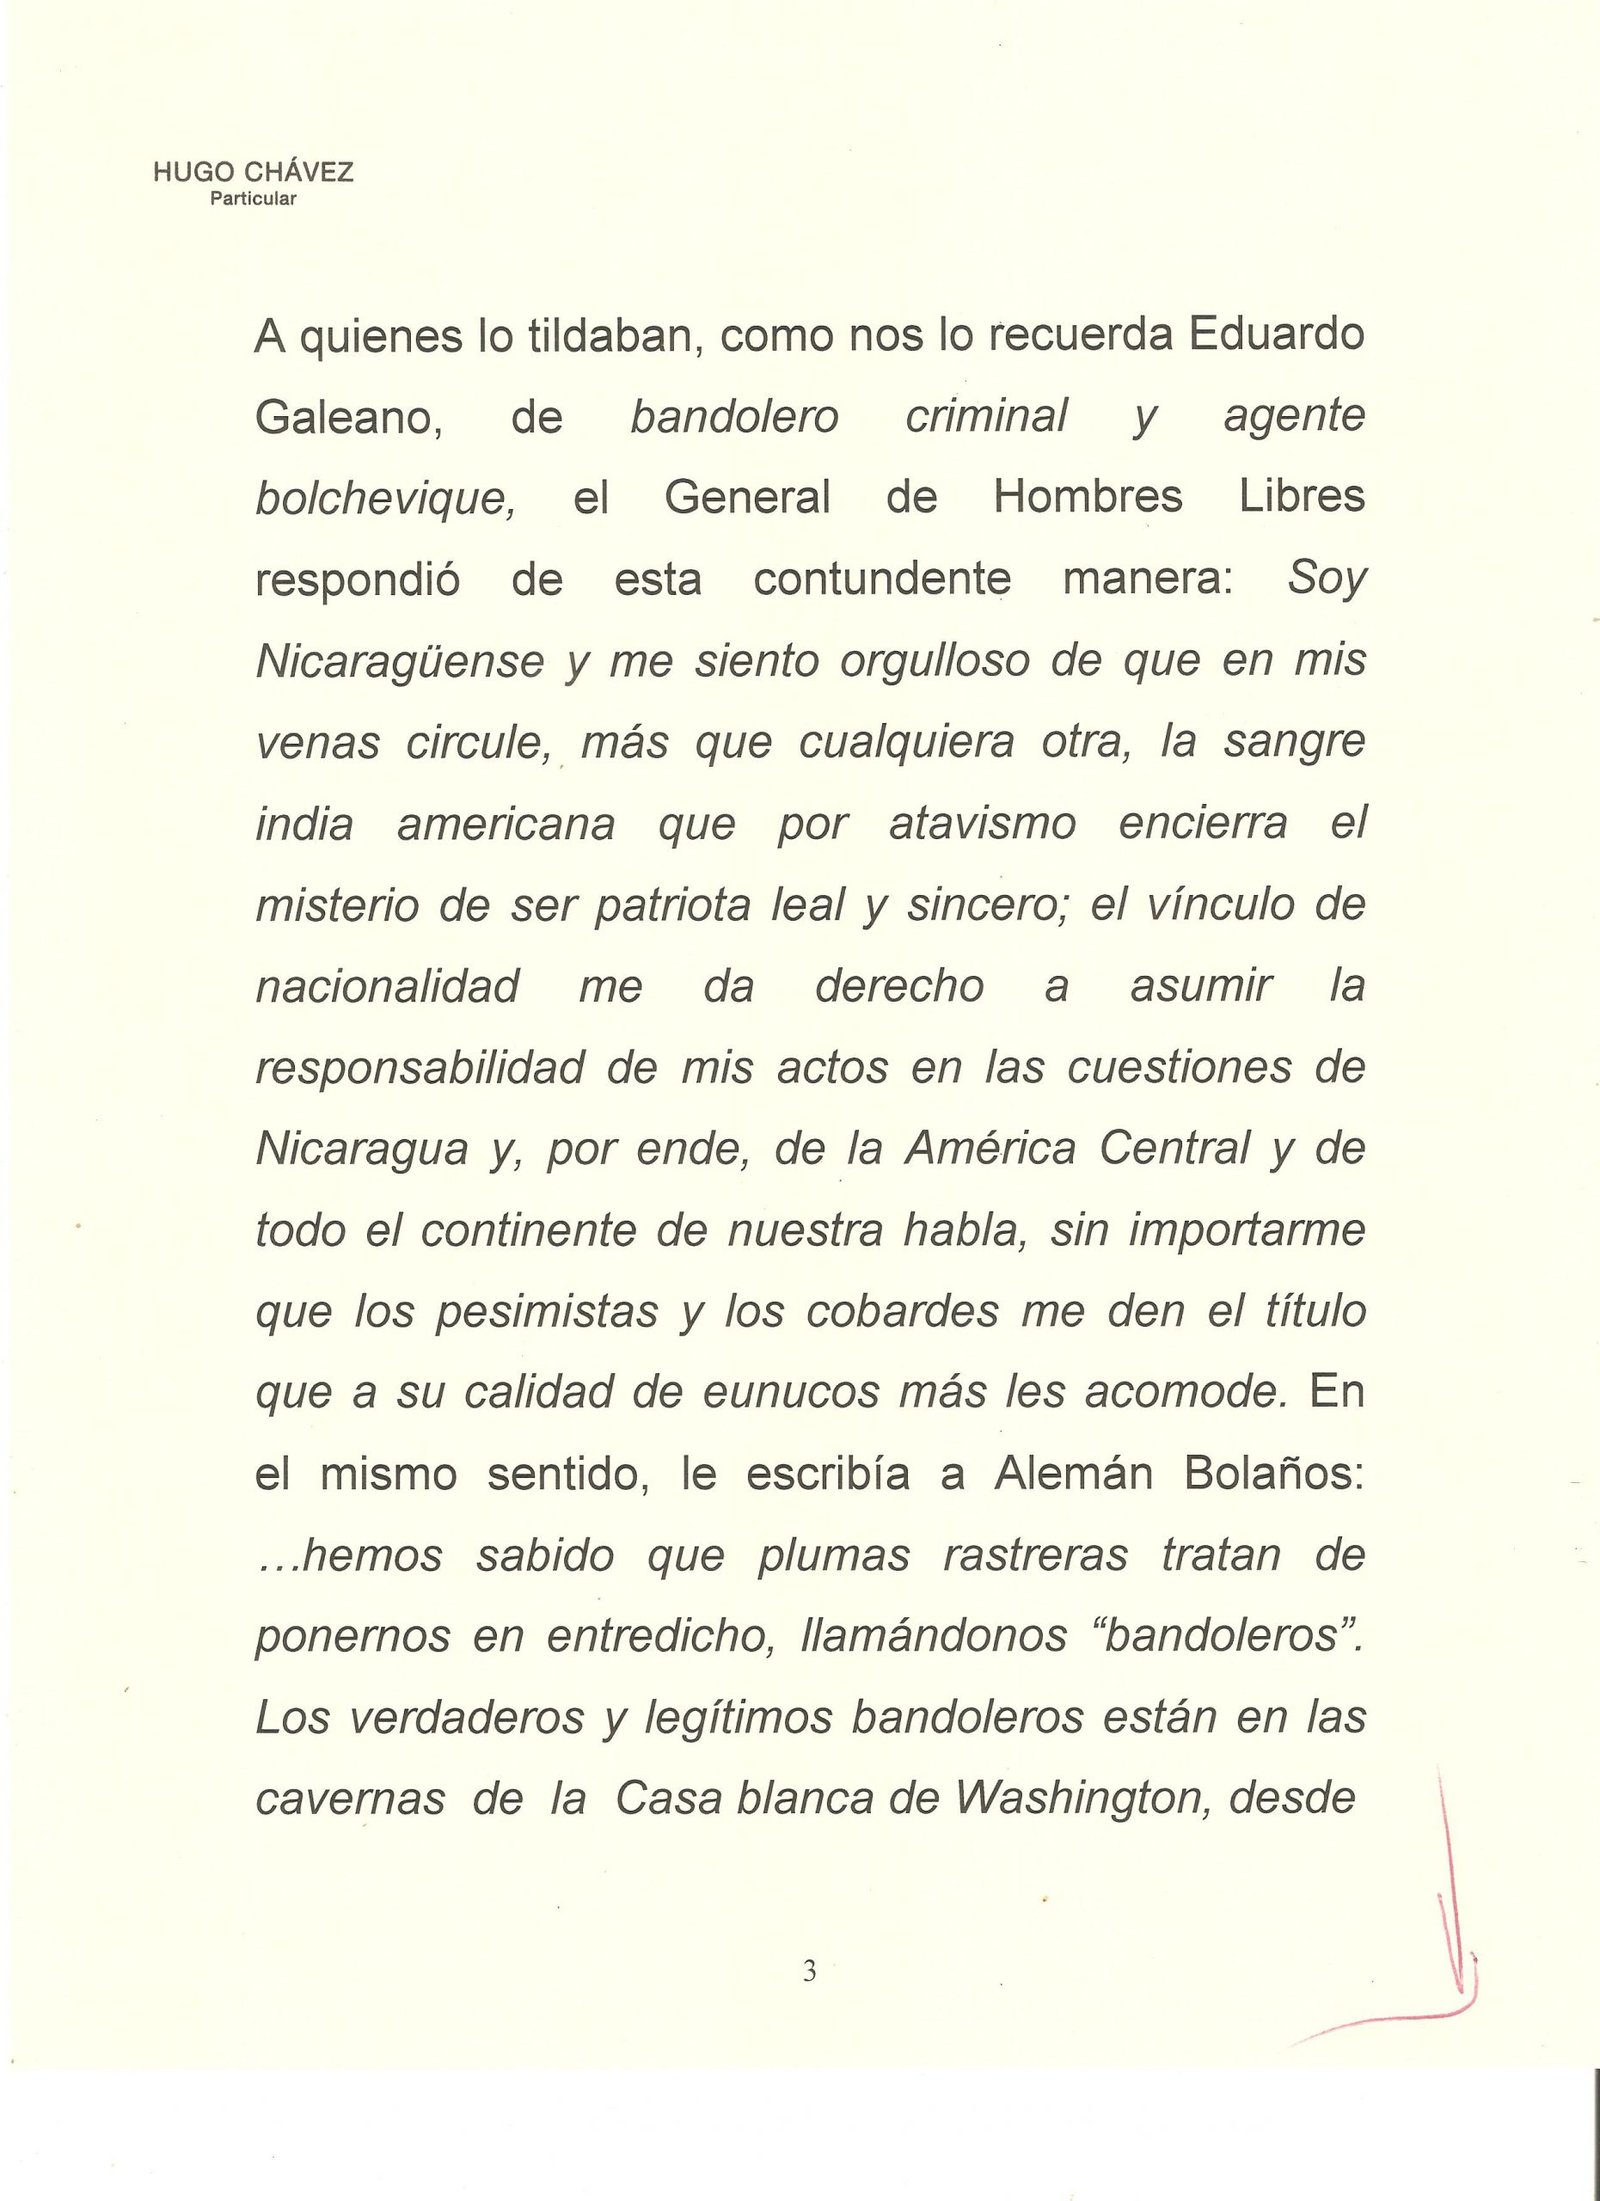 PROLOGO DE HUGO CHAVEZ A WALTER 3